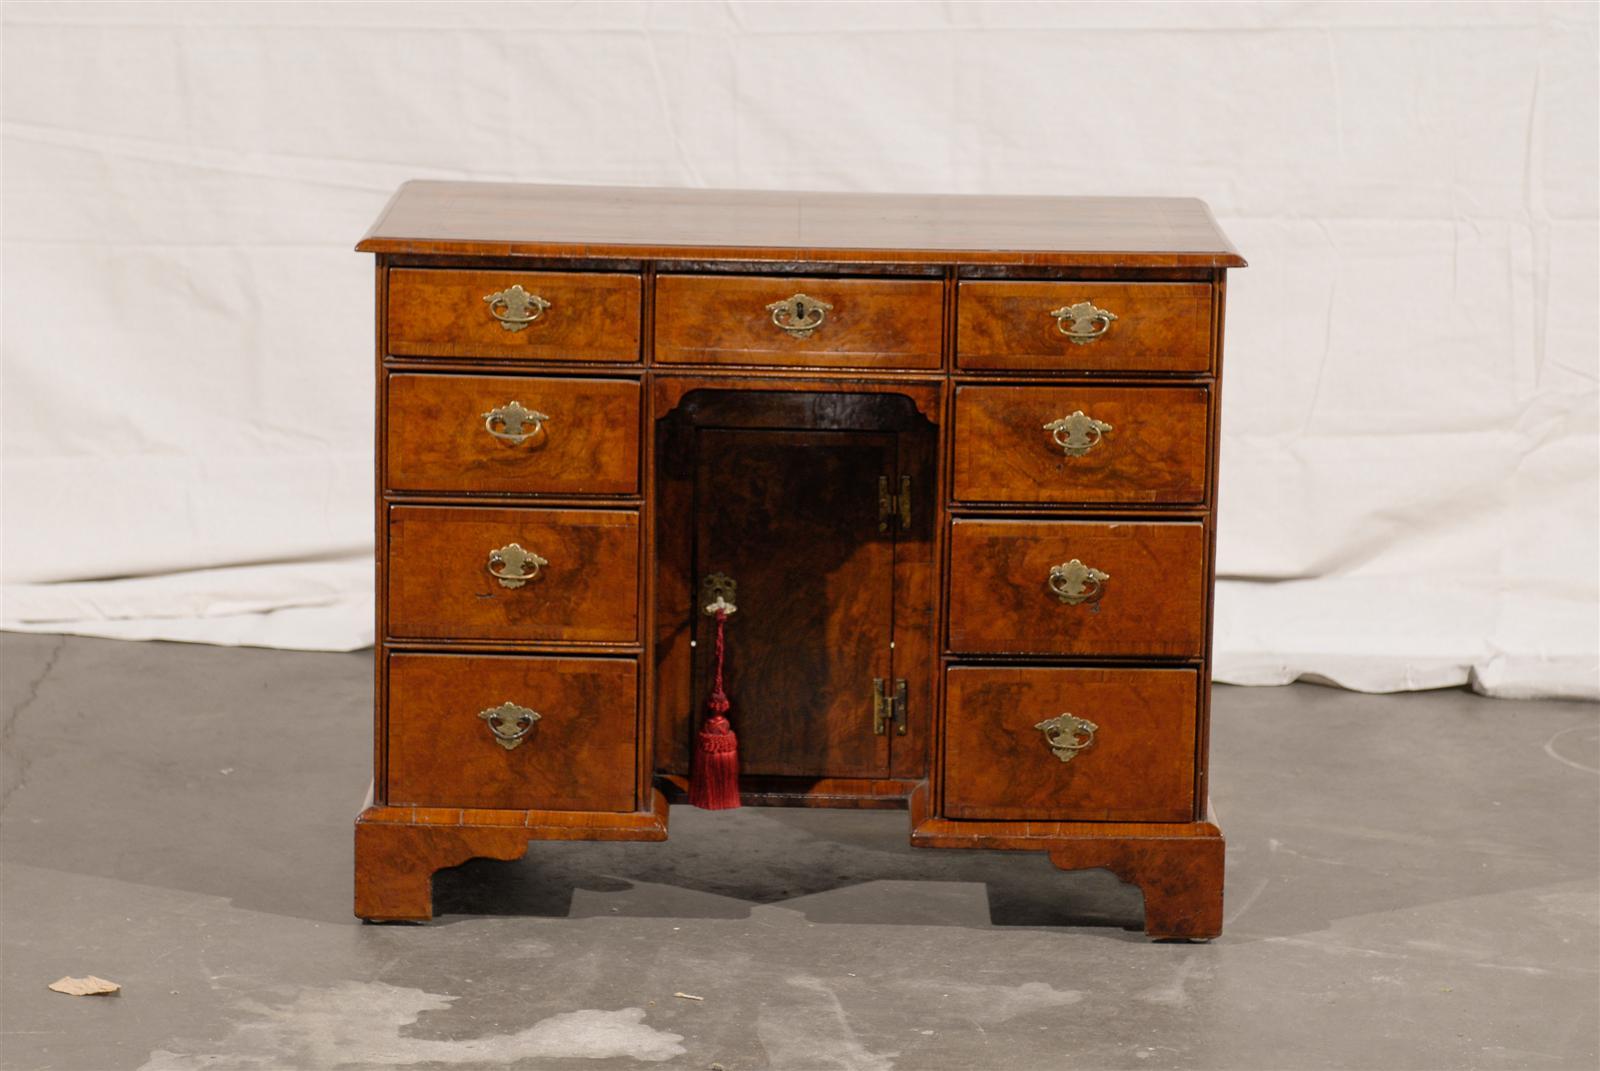 19th century English knee hole desk with burled walnut top.